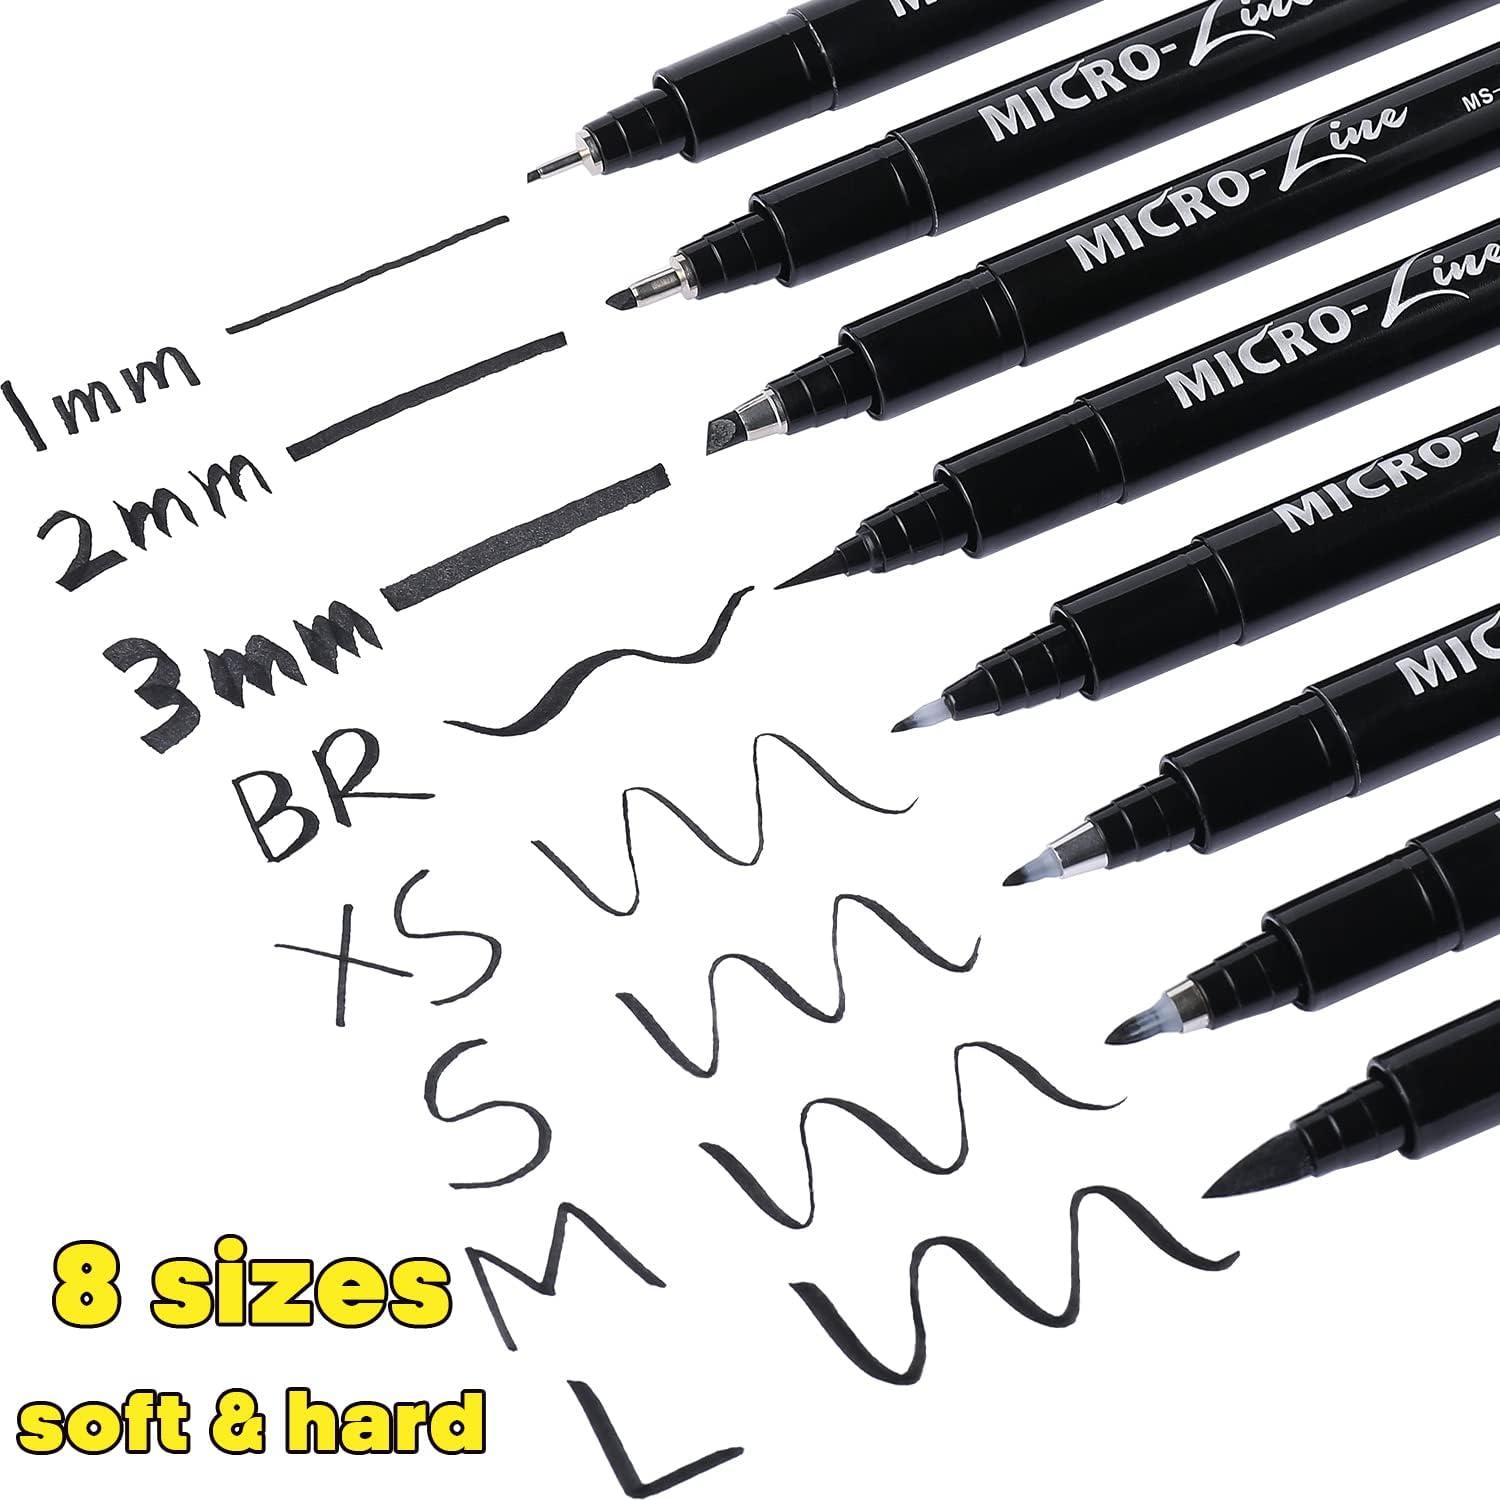 Dyvicl Metallic Marker Pens - Set of 10 Medium Point Metallic Markers for  Rock Painting, Black Paper, Card Making, Scrapbooking Crafts, DIY Photo  Album Bullet tip